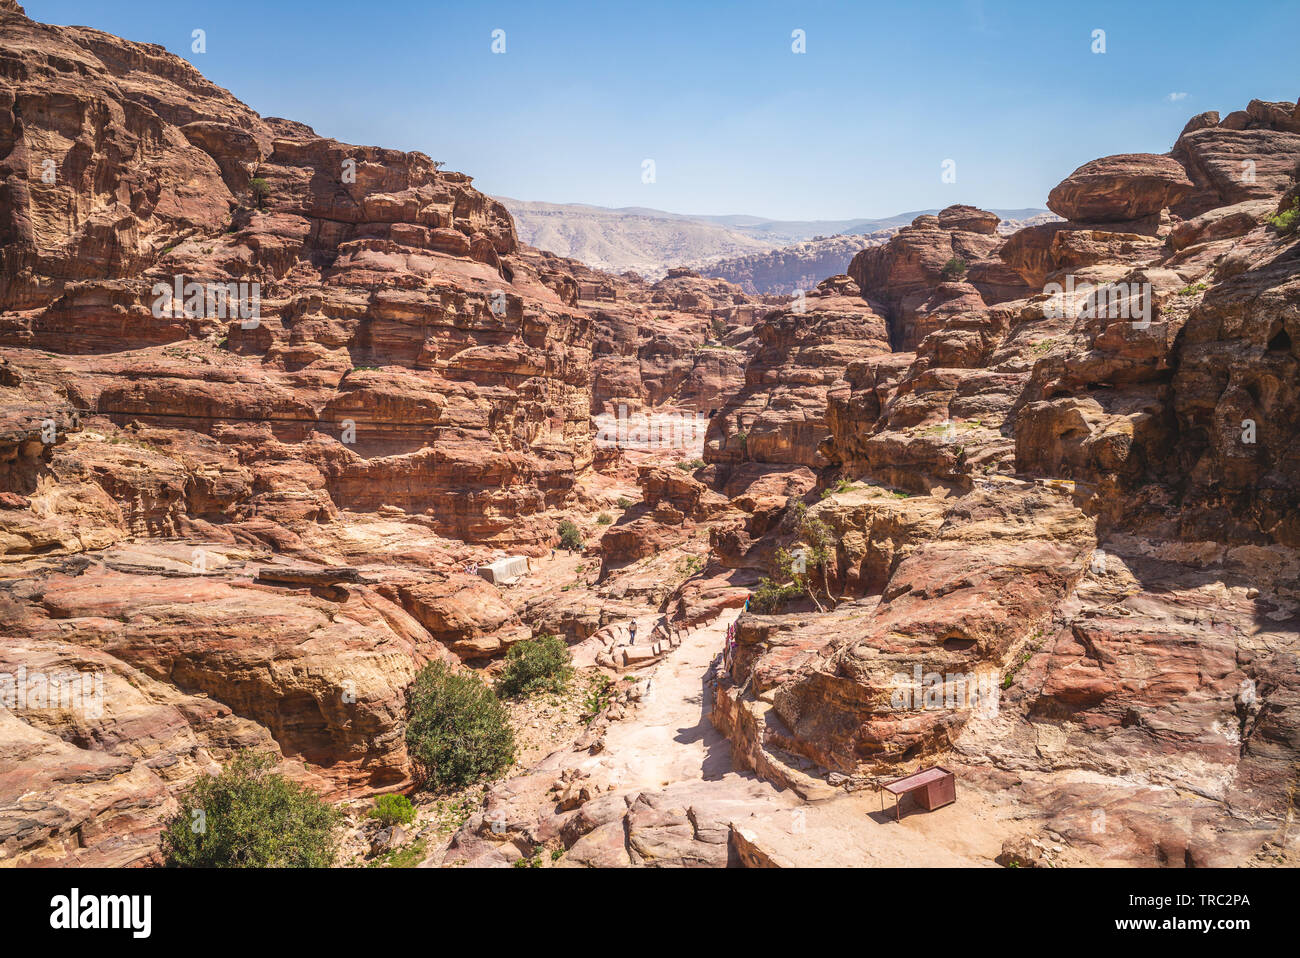 Paisaje de petra, una ciudad histórica de Jordania Foto de stock